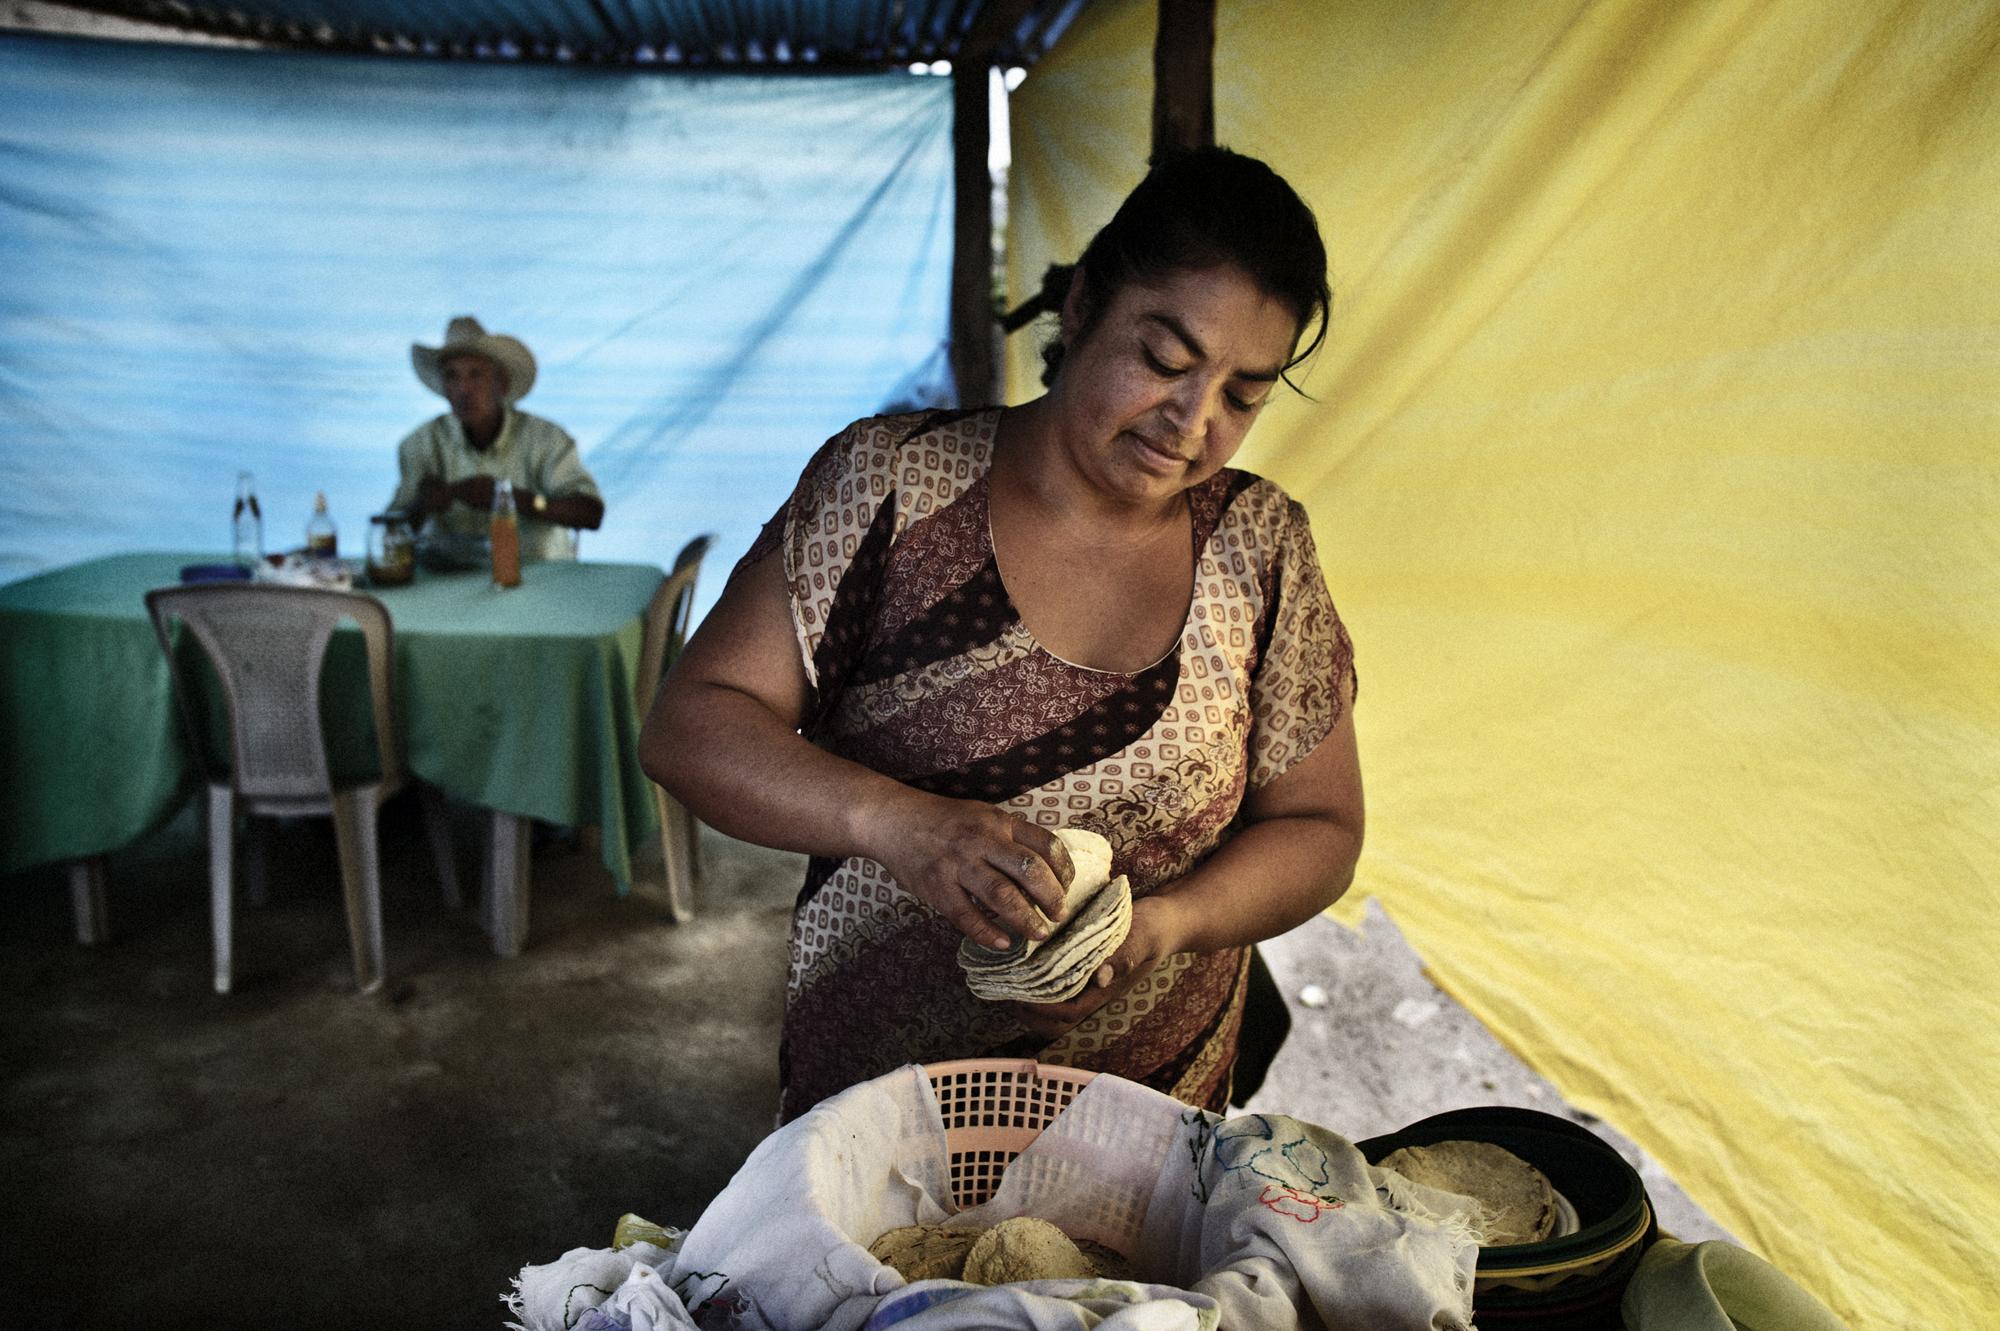 Microcredit / Central America - Lepaterique, Honduras.
October 2010.
Patricia Amador...